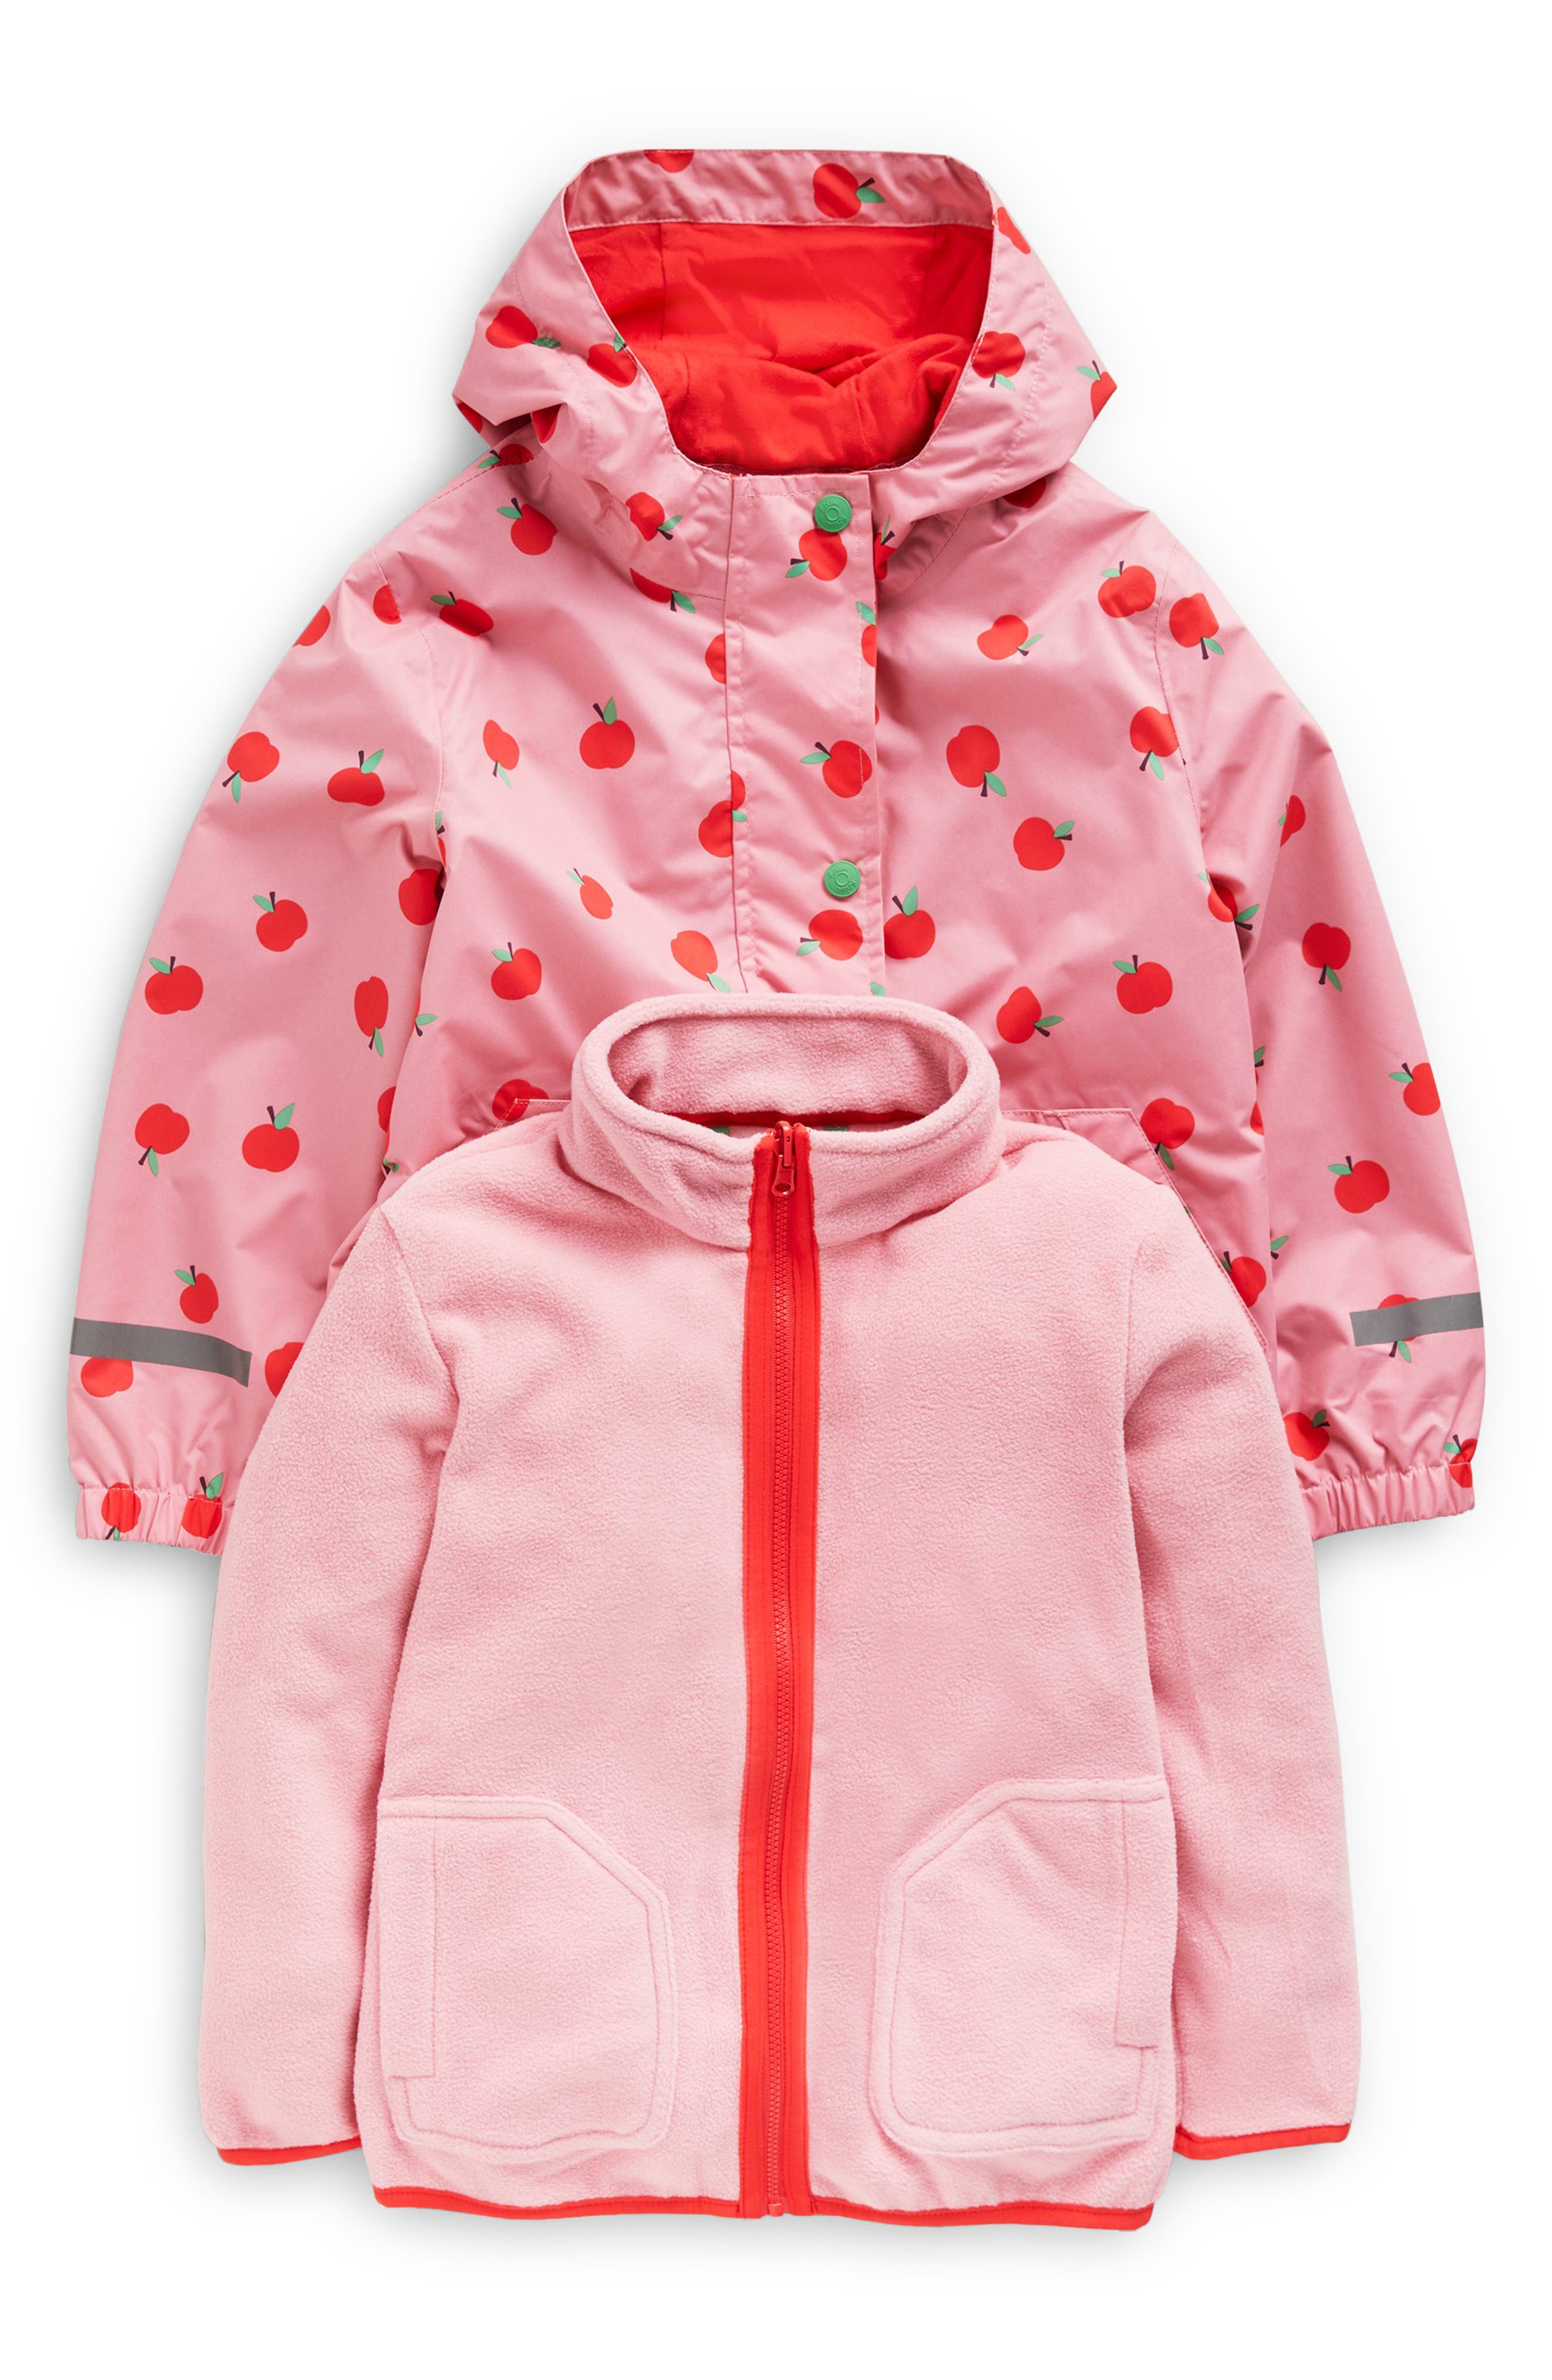 Mini Boden Kids' 3-in-1 Waterproof Jacket in Formica Pink Apples